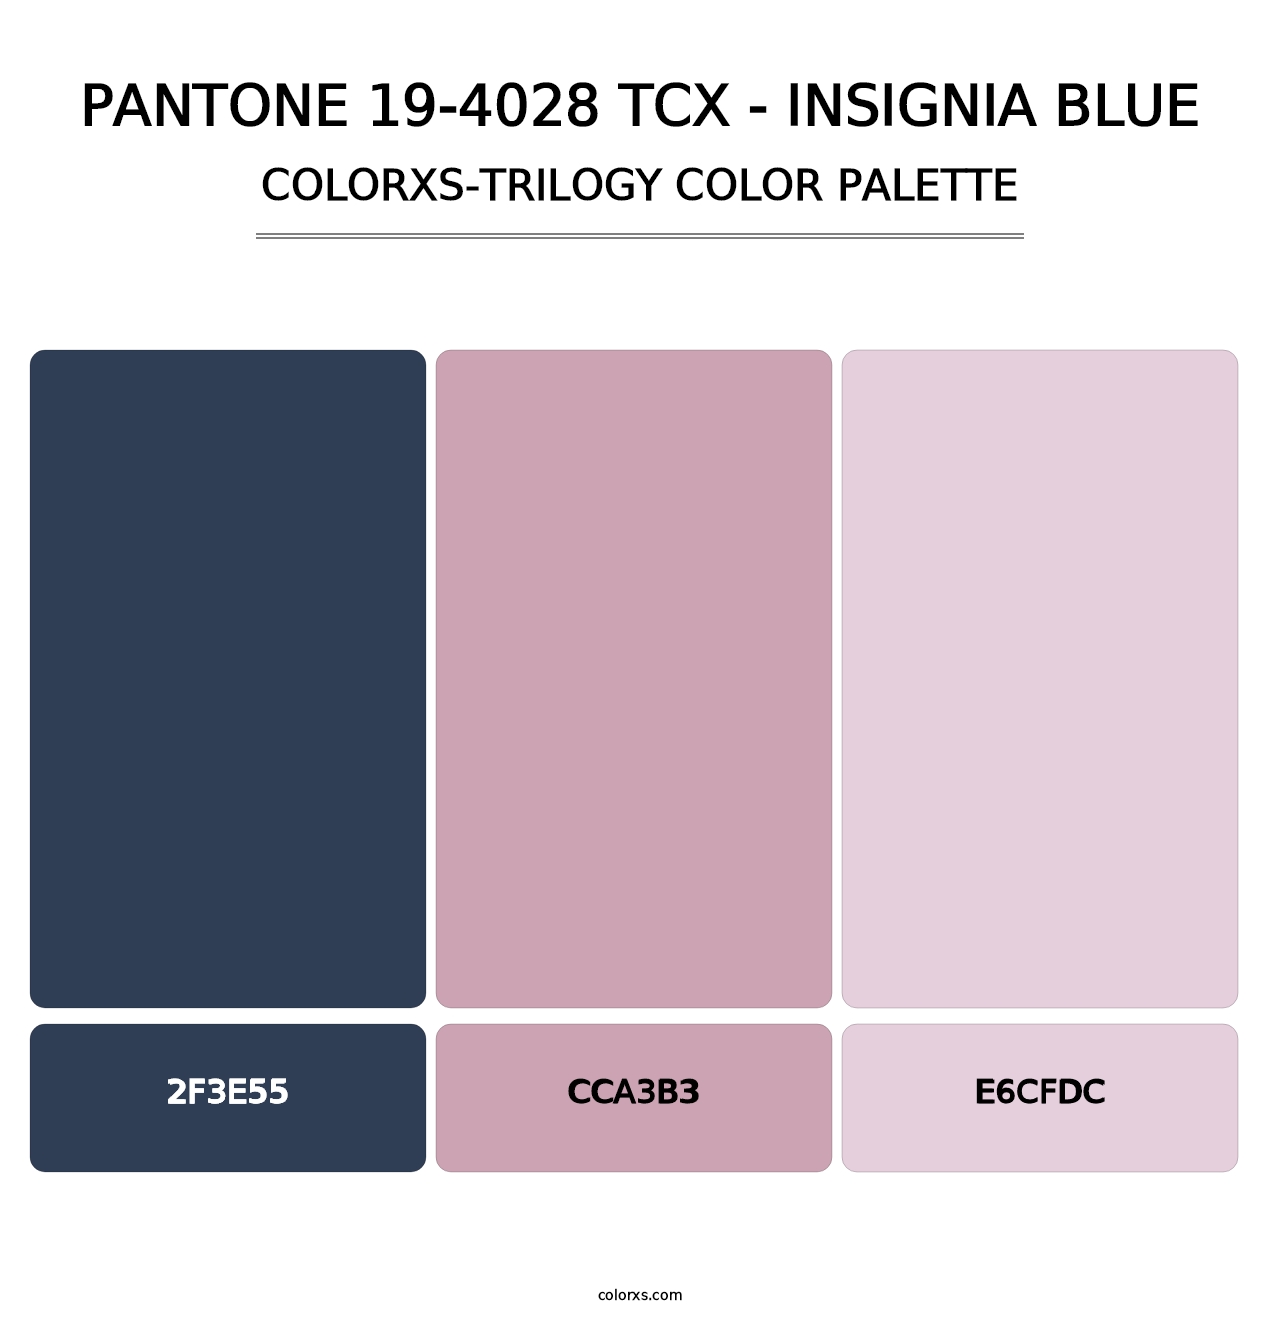 PANTONE 19-4028 TCX - Insignia Blue - Colorxs Trilogy Palette